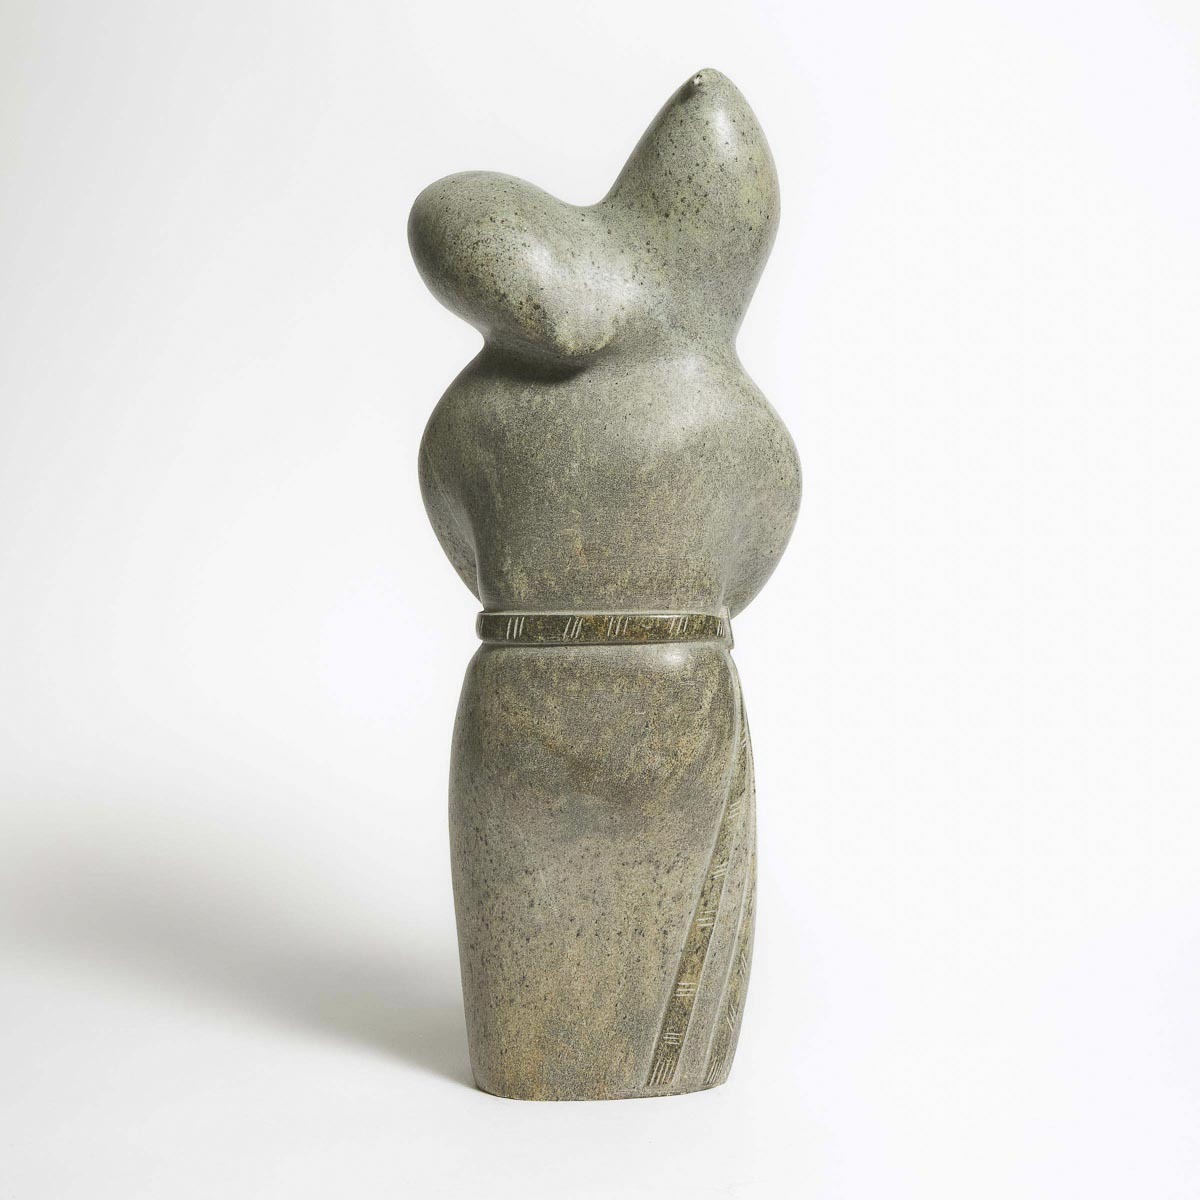 David Ruben Piqtoukun ᑎᕕᑎ ᐱᑐᑯ ᕈᐱᐃᓐ (b. 1950), WOMAN WITH OWL, 2011, stone, catlinite, 19.25 x 17.25 - Image 5 of 6